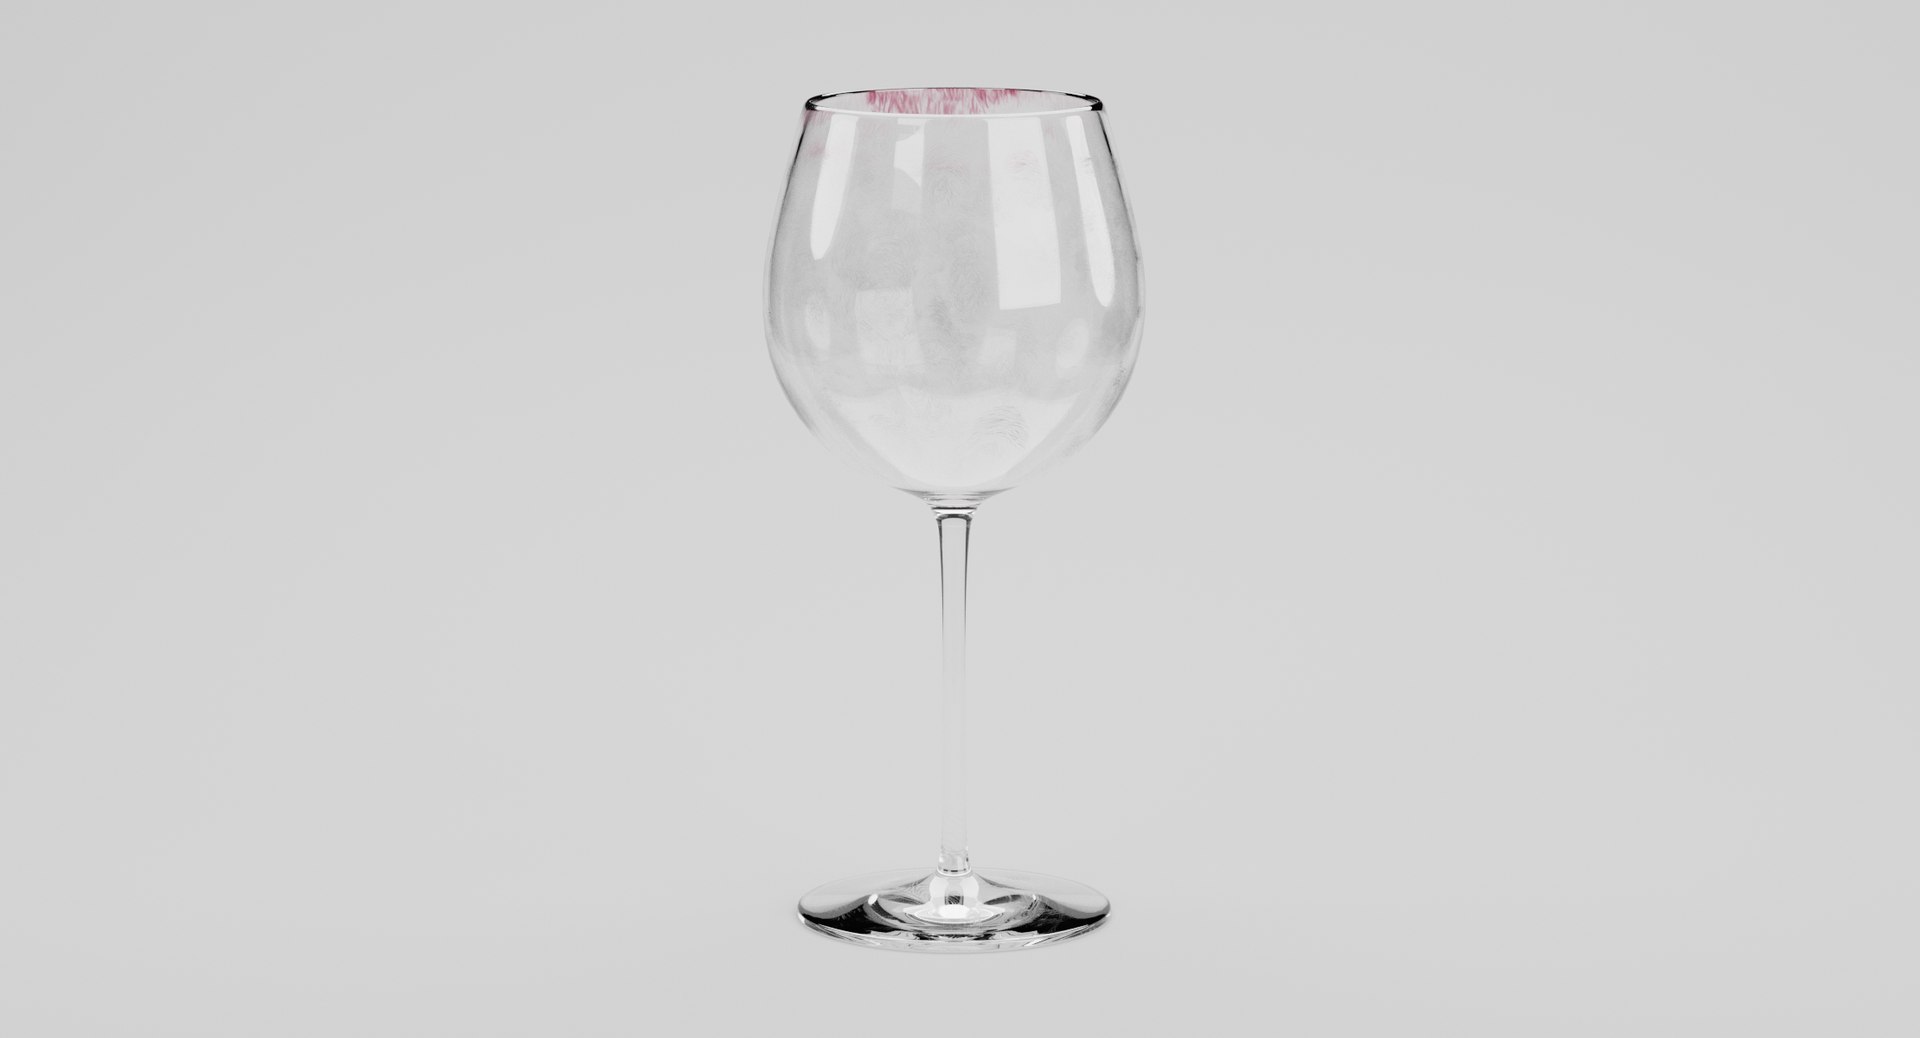 Dirty wine glass 3D model - TurboSquid 1227387